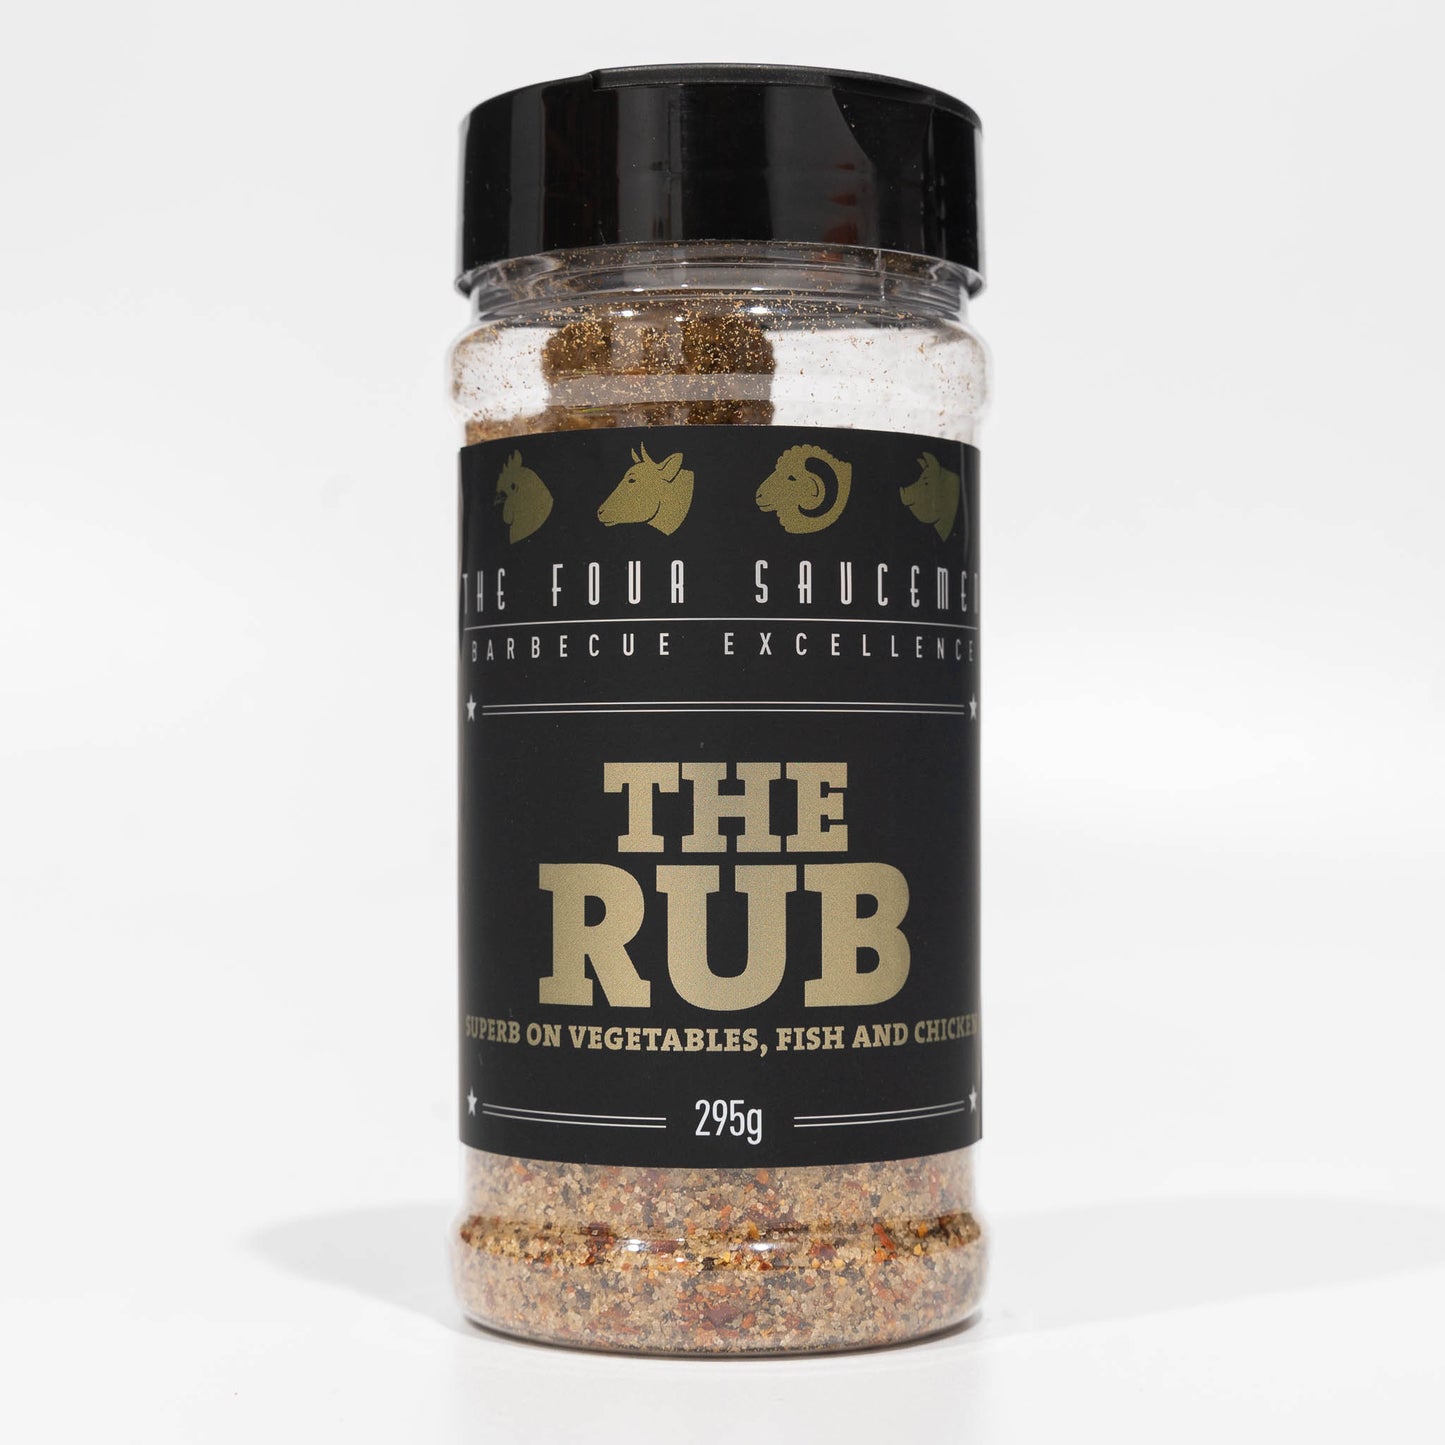 The Rub 285g - The Four Saucemen